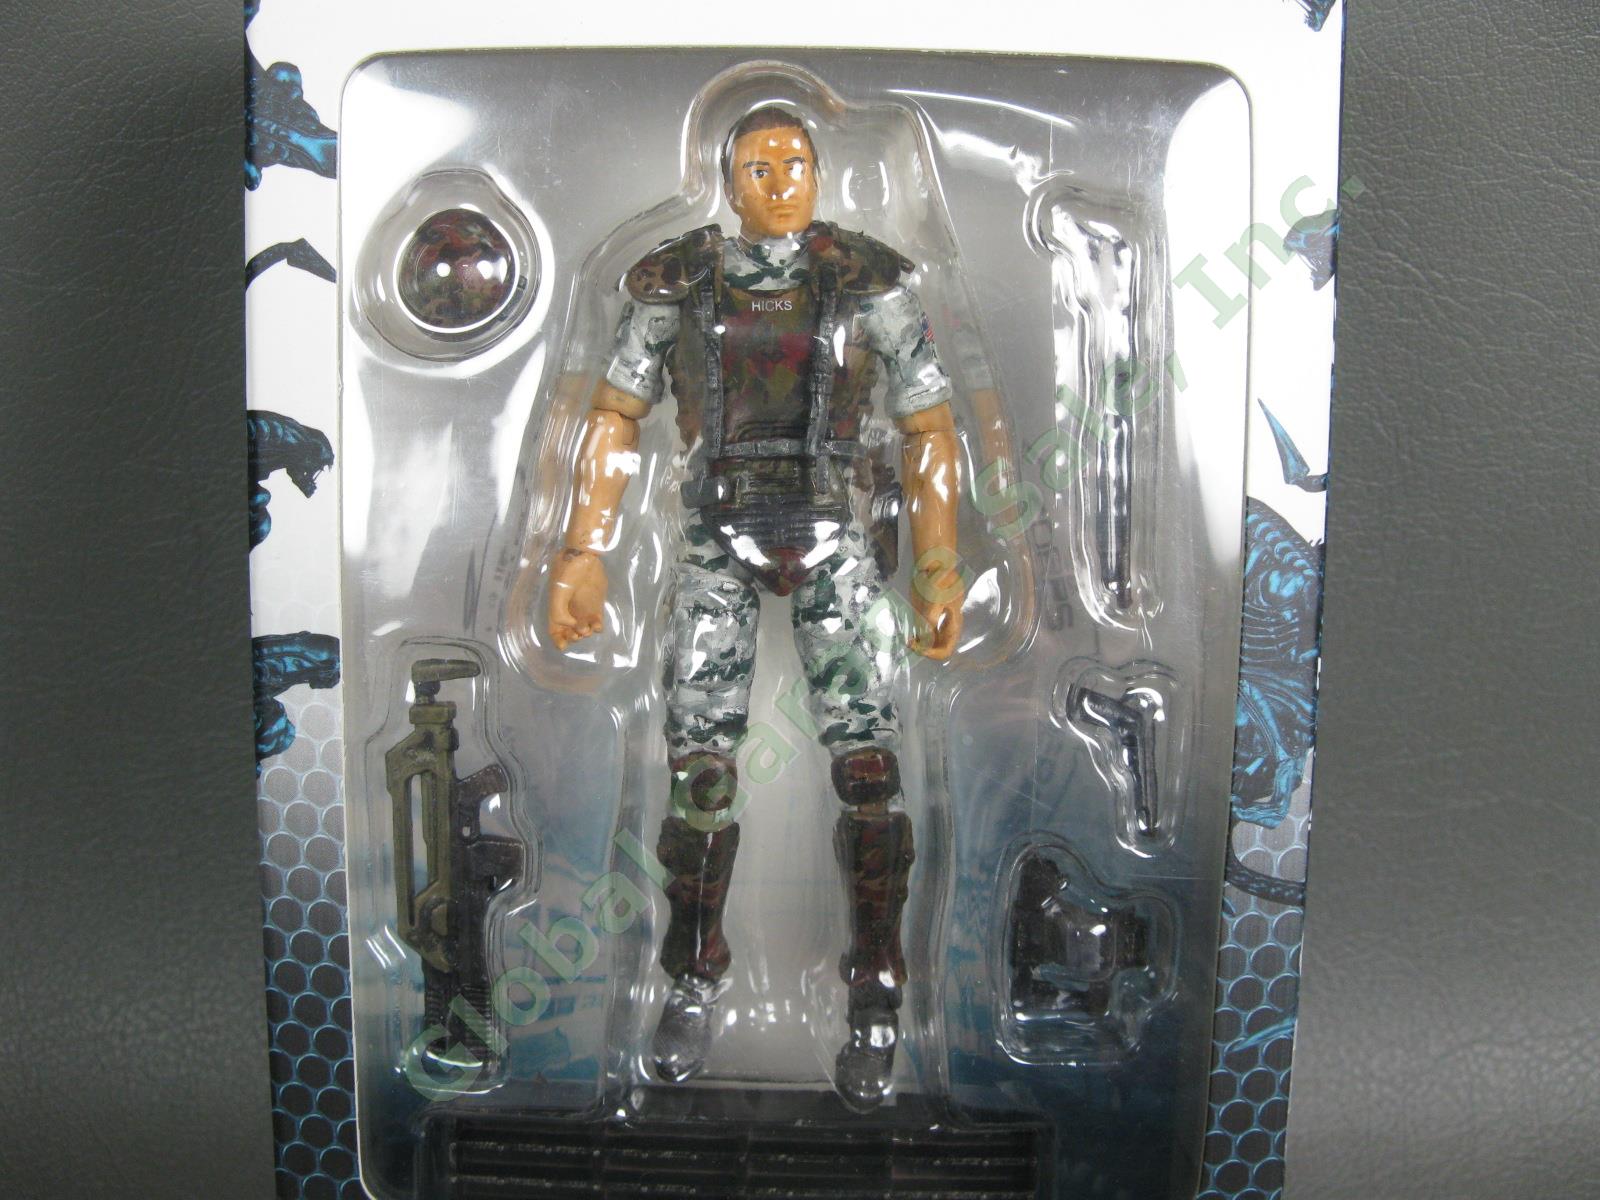 NEW 2012 Aliens Colonial Marines 3.75" Hicks Figure Hiya Toys Exquisite Mini NR 1